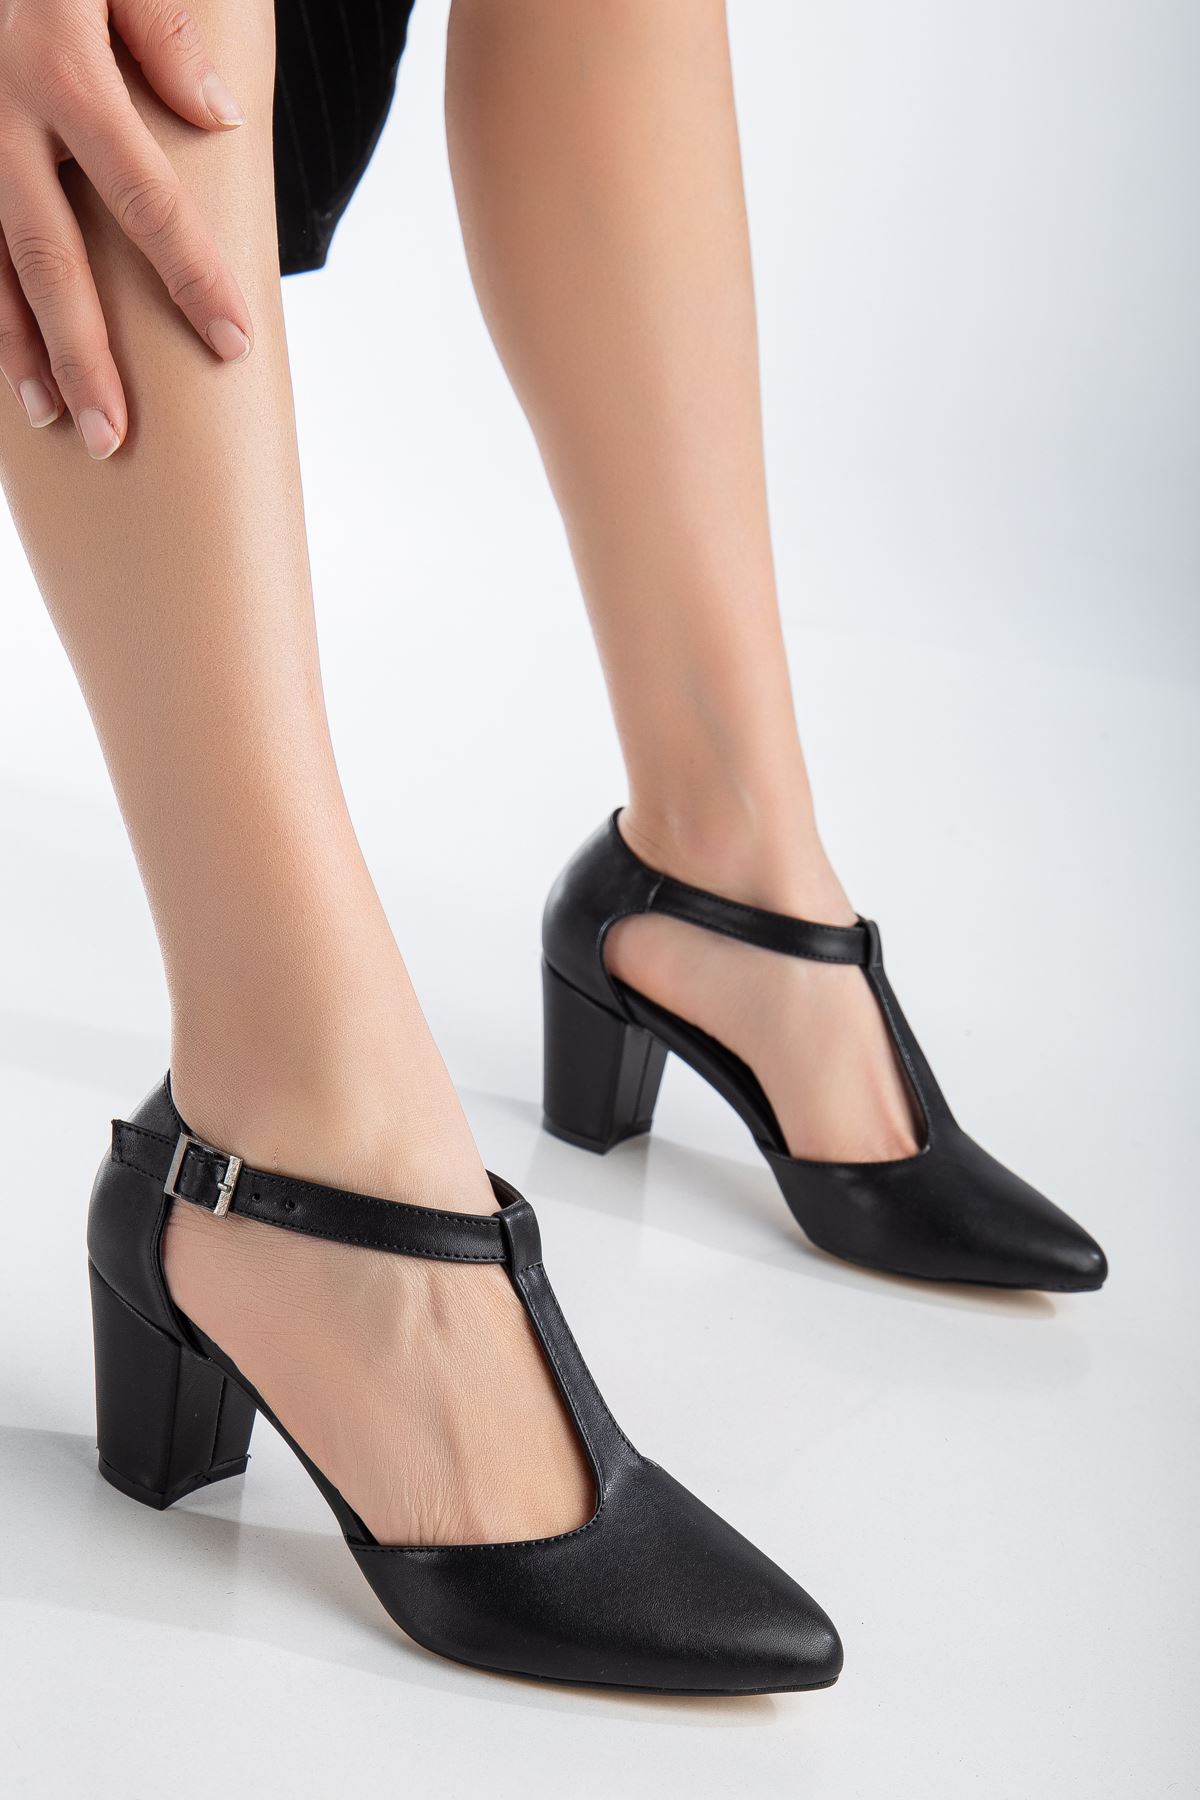 Niven Siyah Cilt Topuklu Kadın Ayakkabı